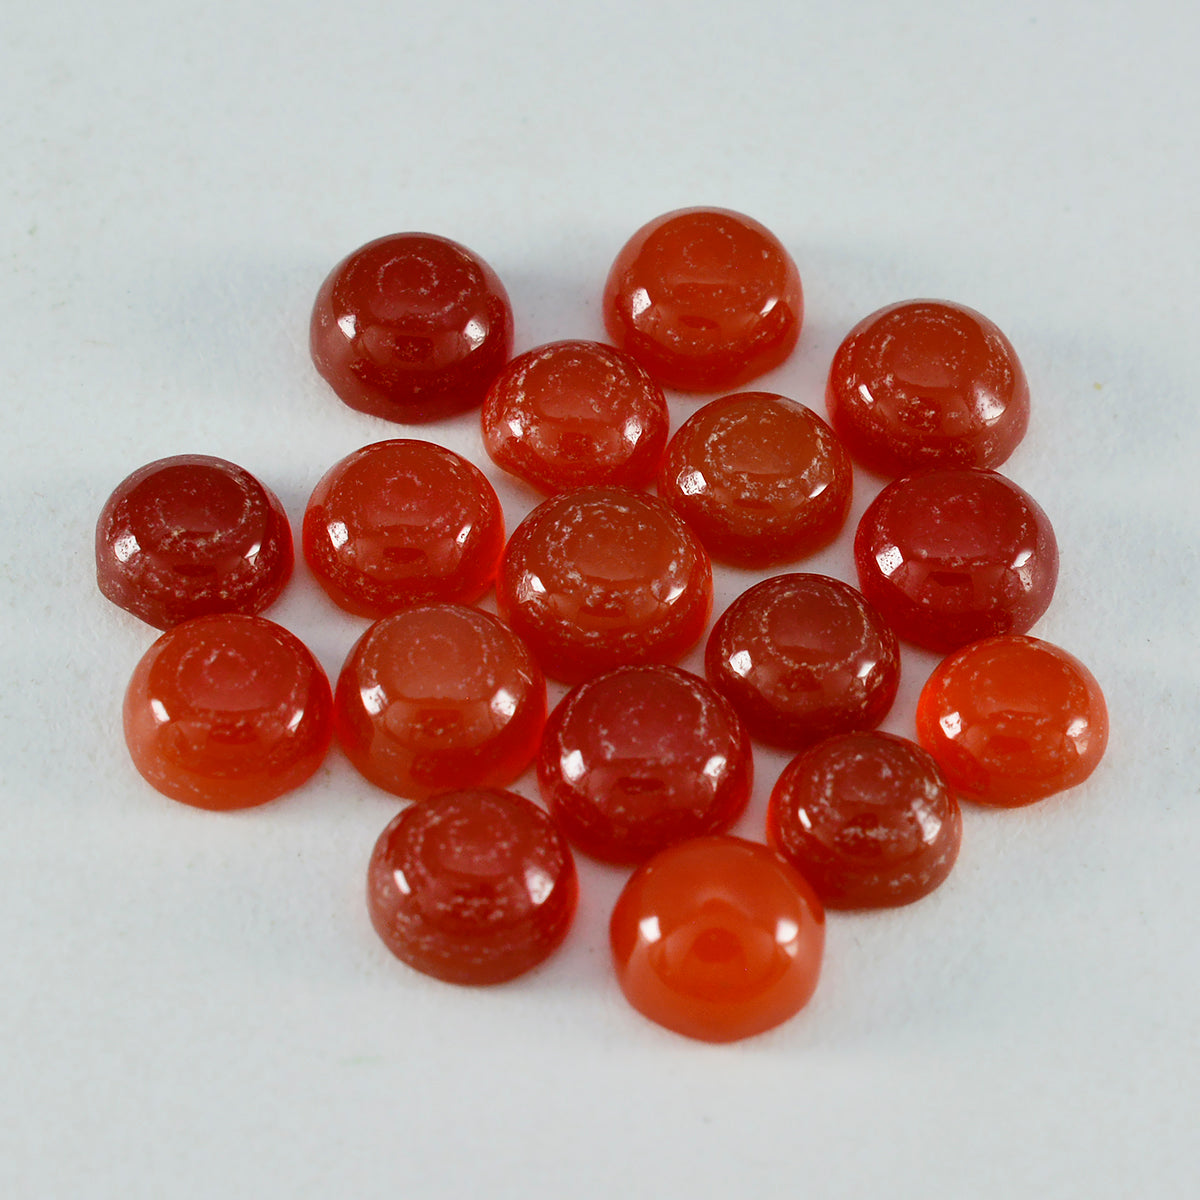 Riyogems 1PC Red Onyx Cabochon 8x8 mm Round Shape wonderful Quality Stone